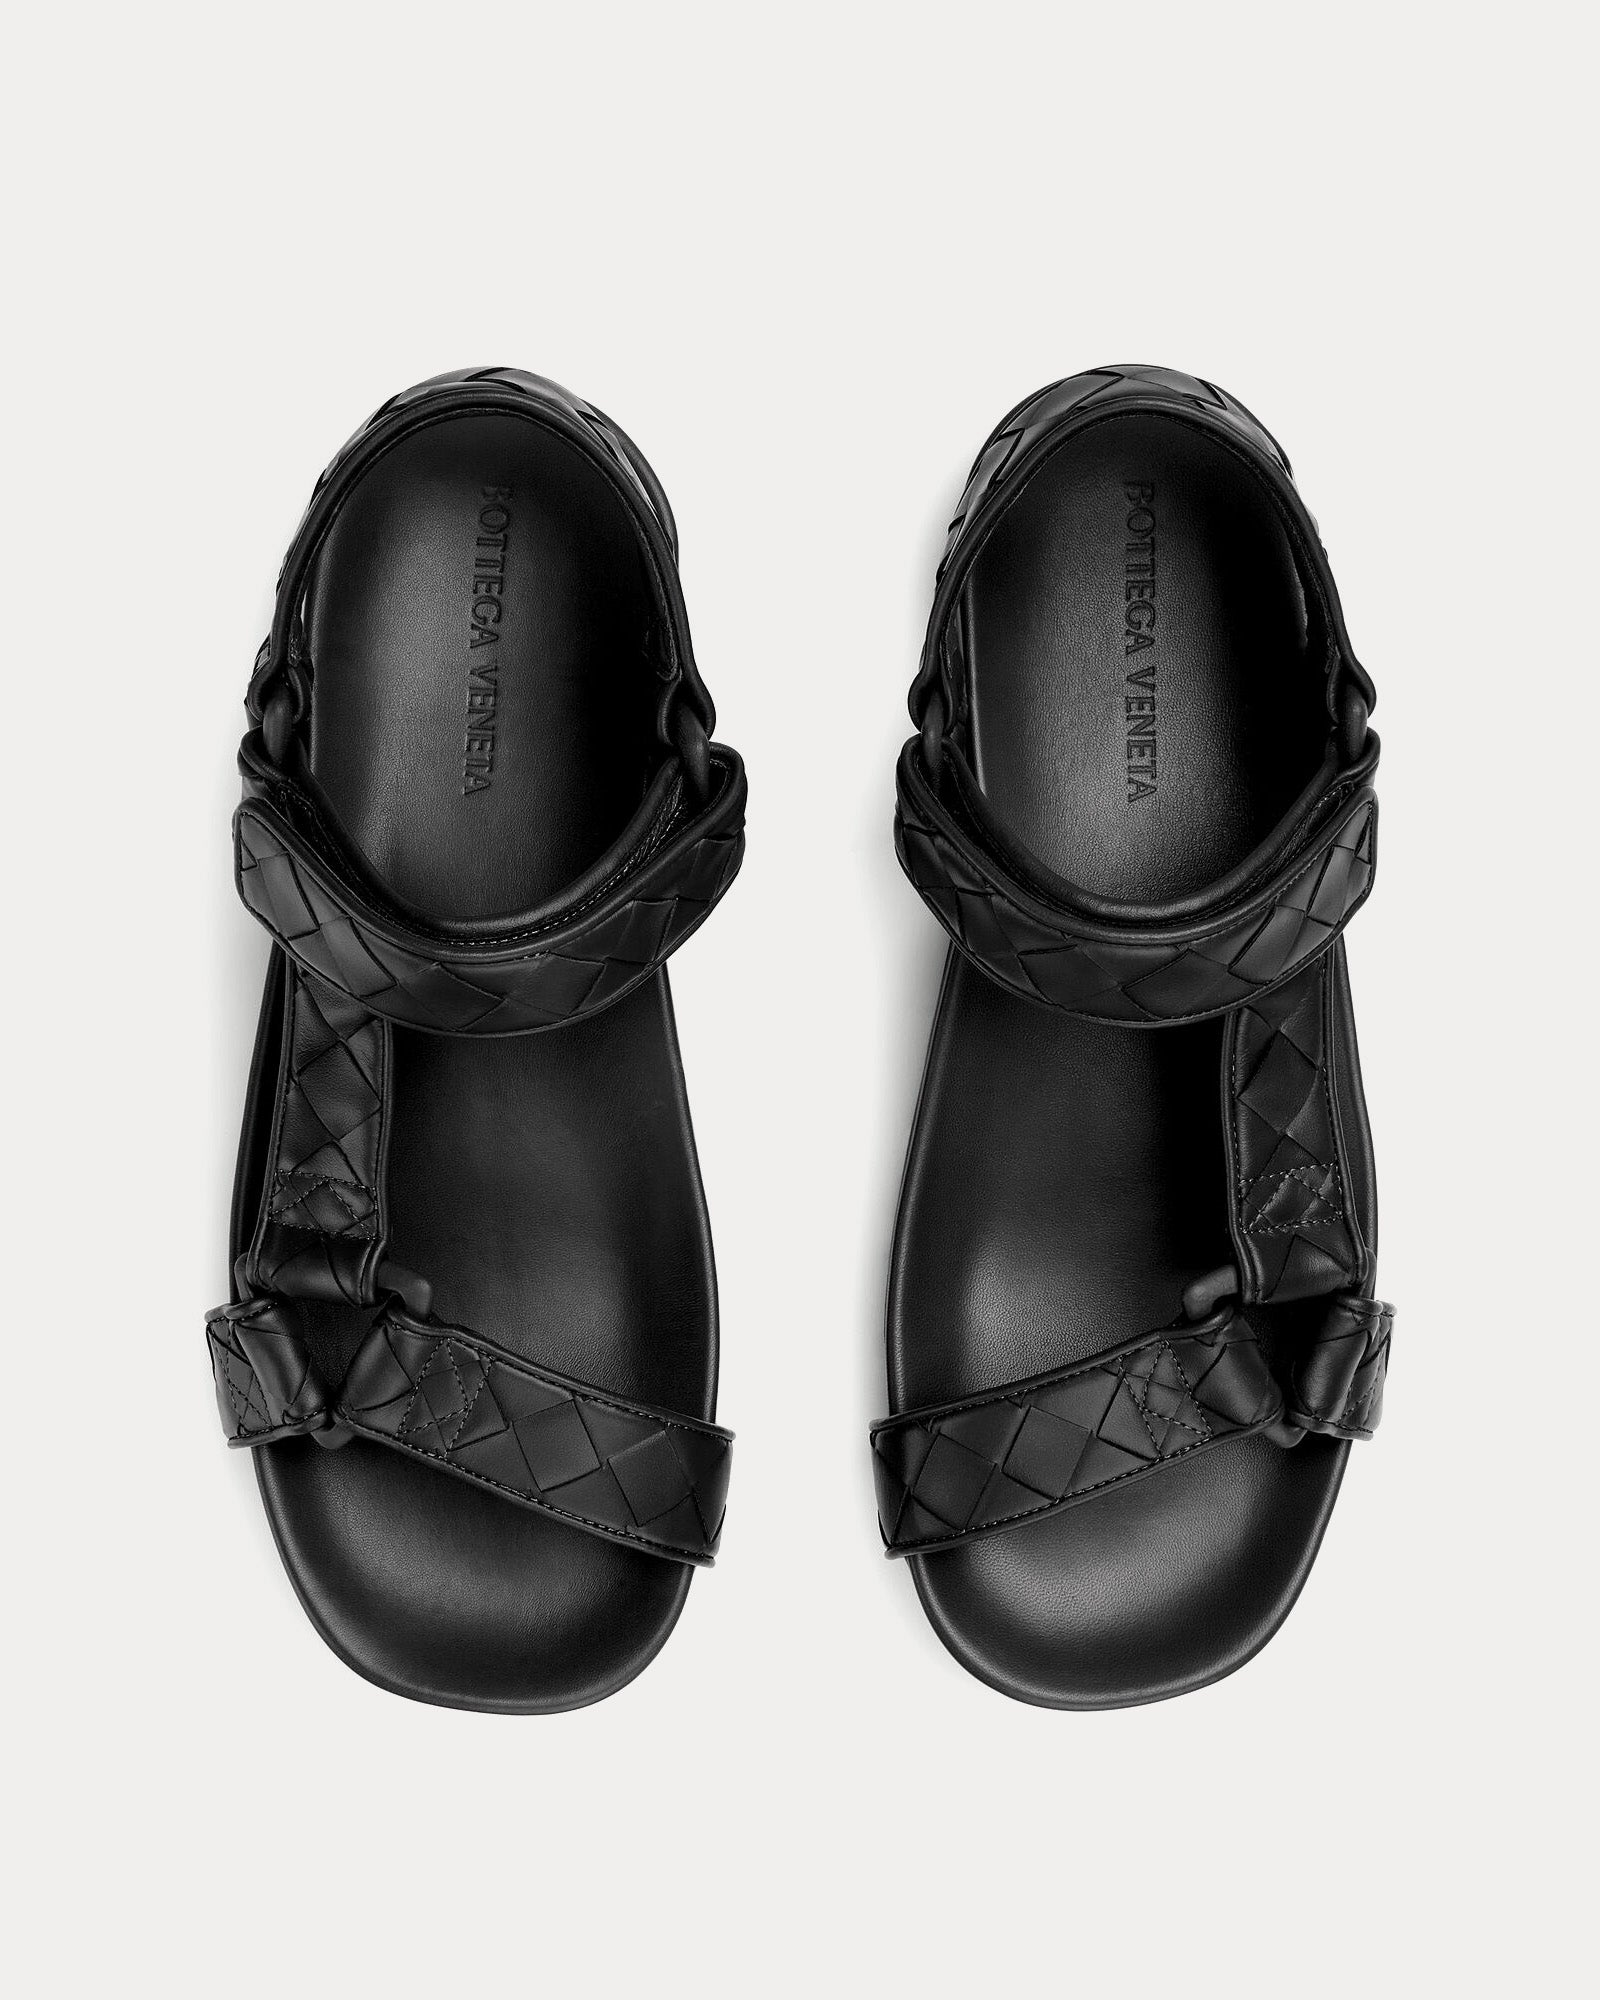 Bottega Veneta - Trip Leather Black Sandals